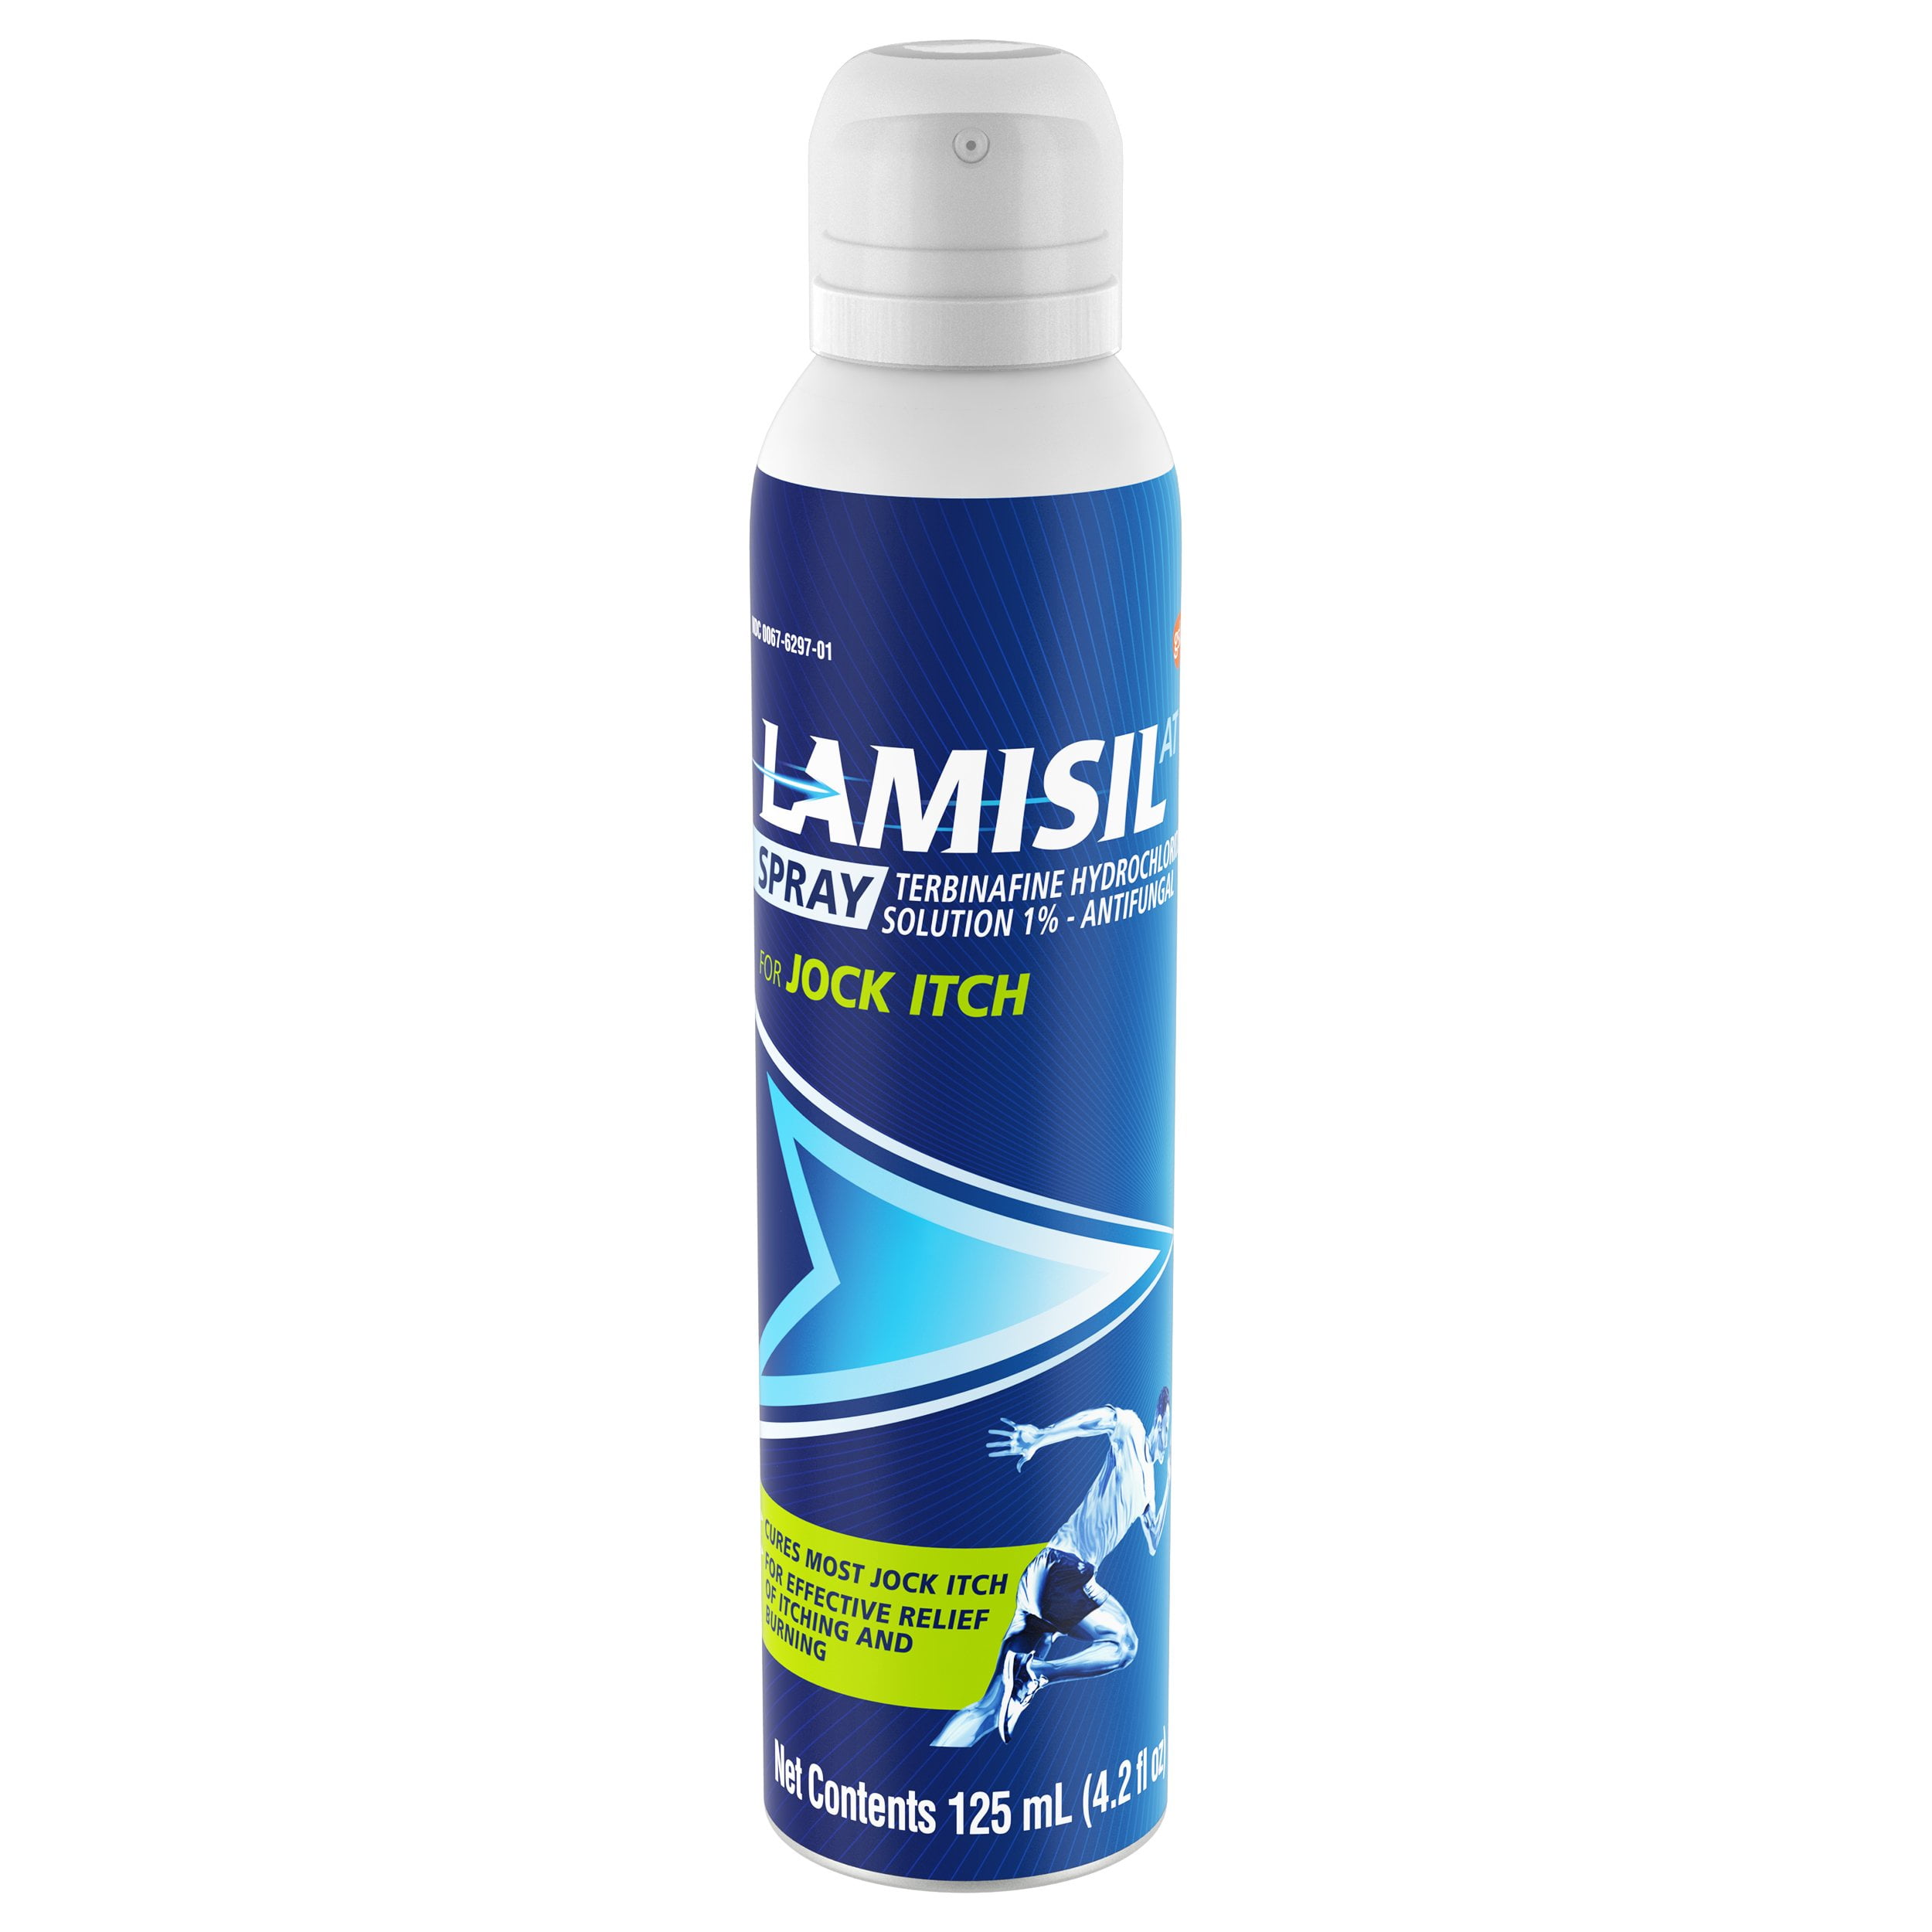 Lamisilat Prescription Strength Jock Itch Spray, Antifungal Spray for